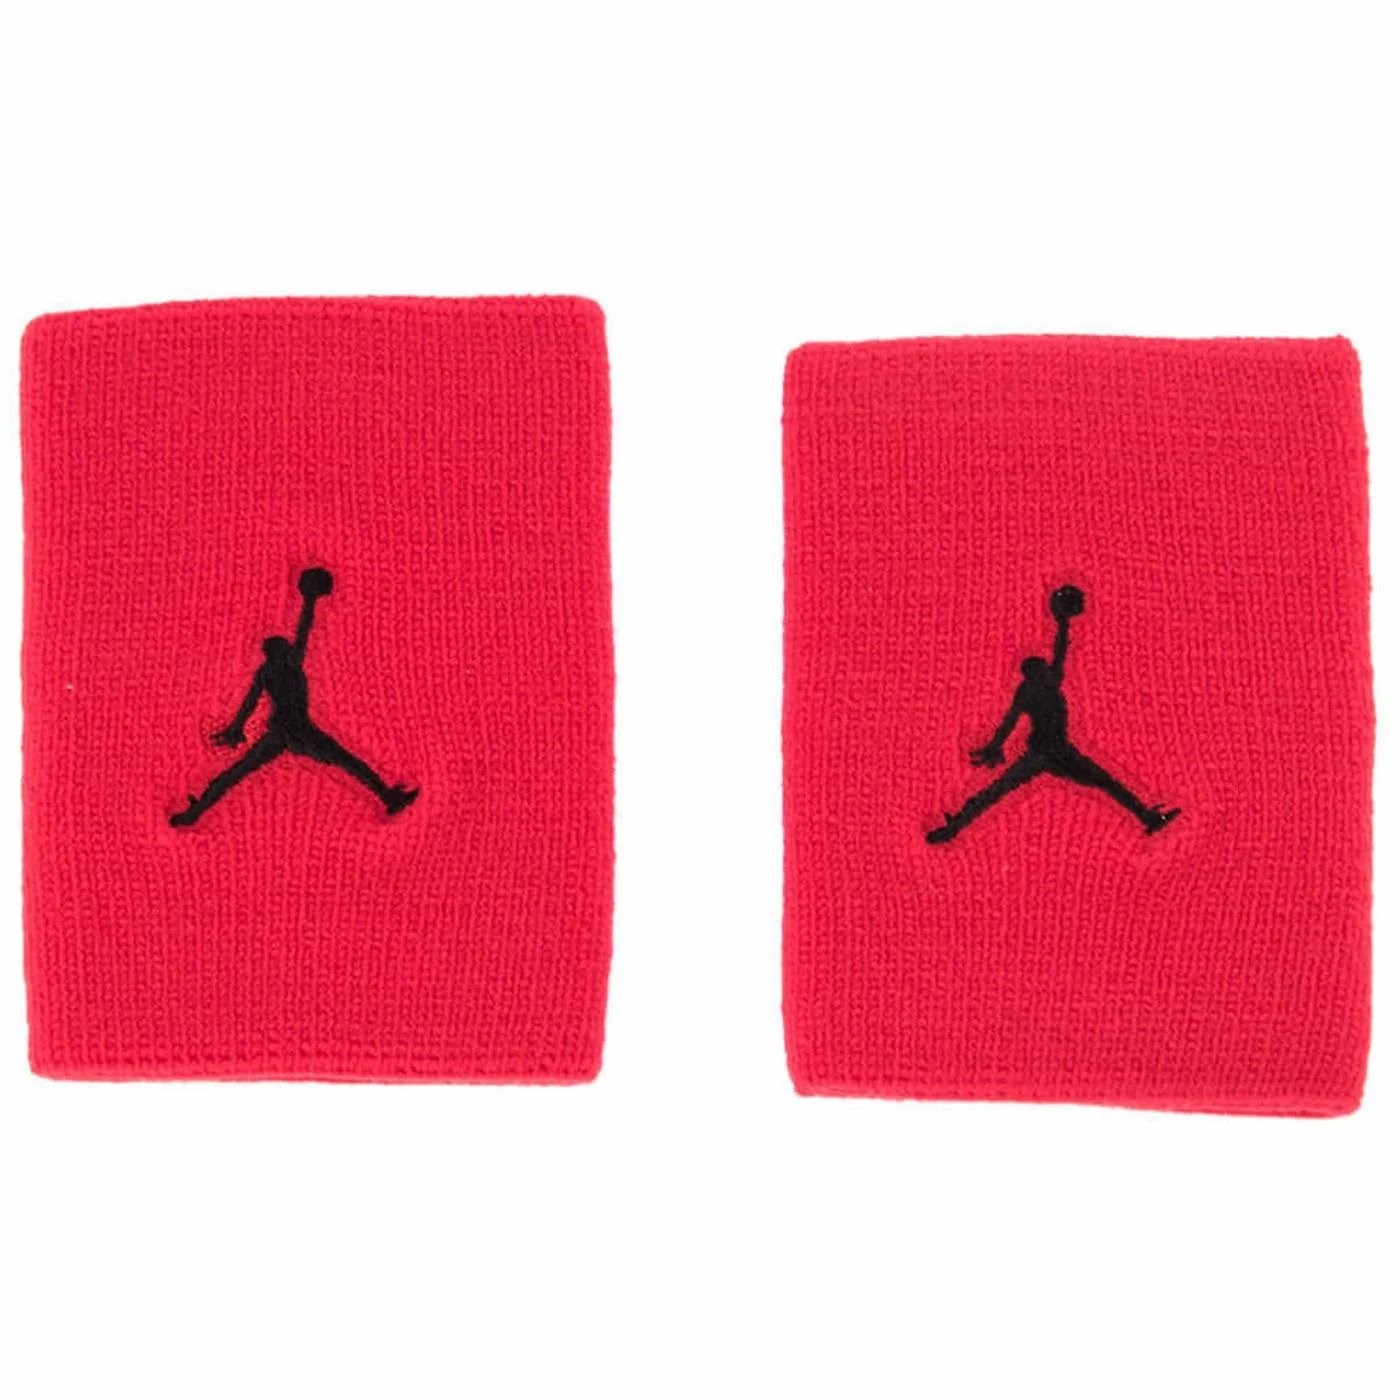 Nike Jordan Jumpman Wristbands 2 PK Erkek Bileklik Kırmızı